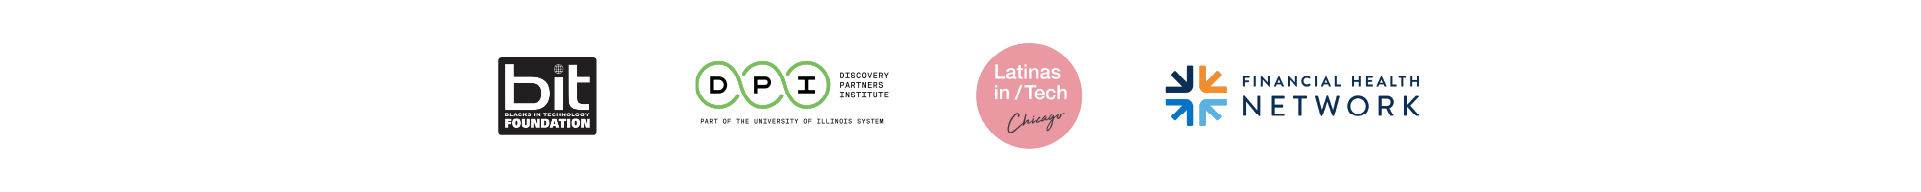 Logos of Latinas in Tech, DPI & Blacks in Tech